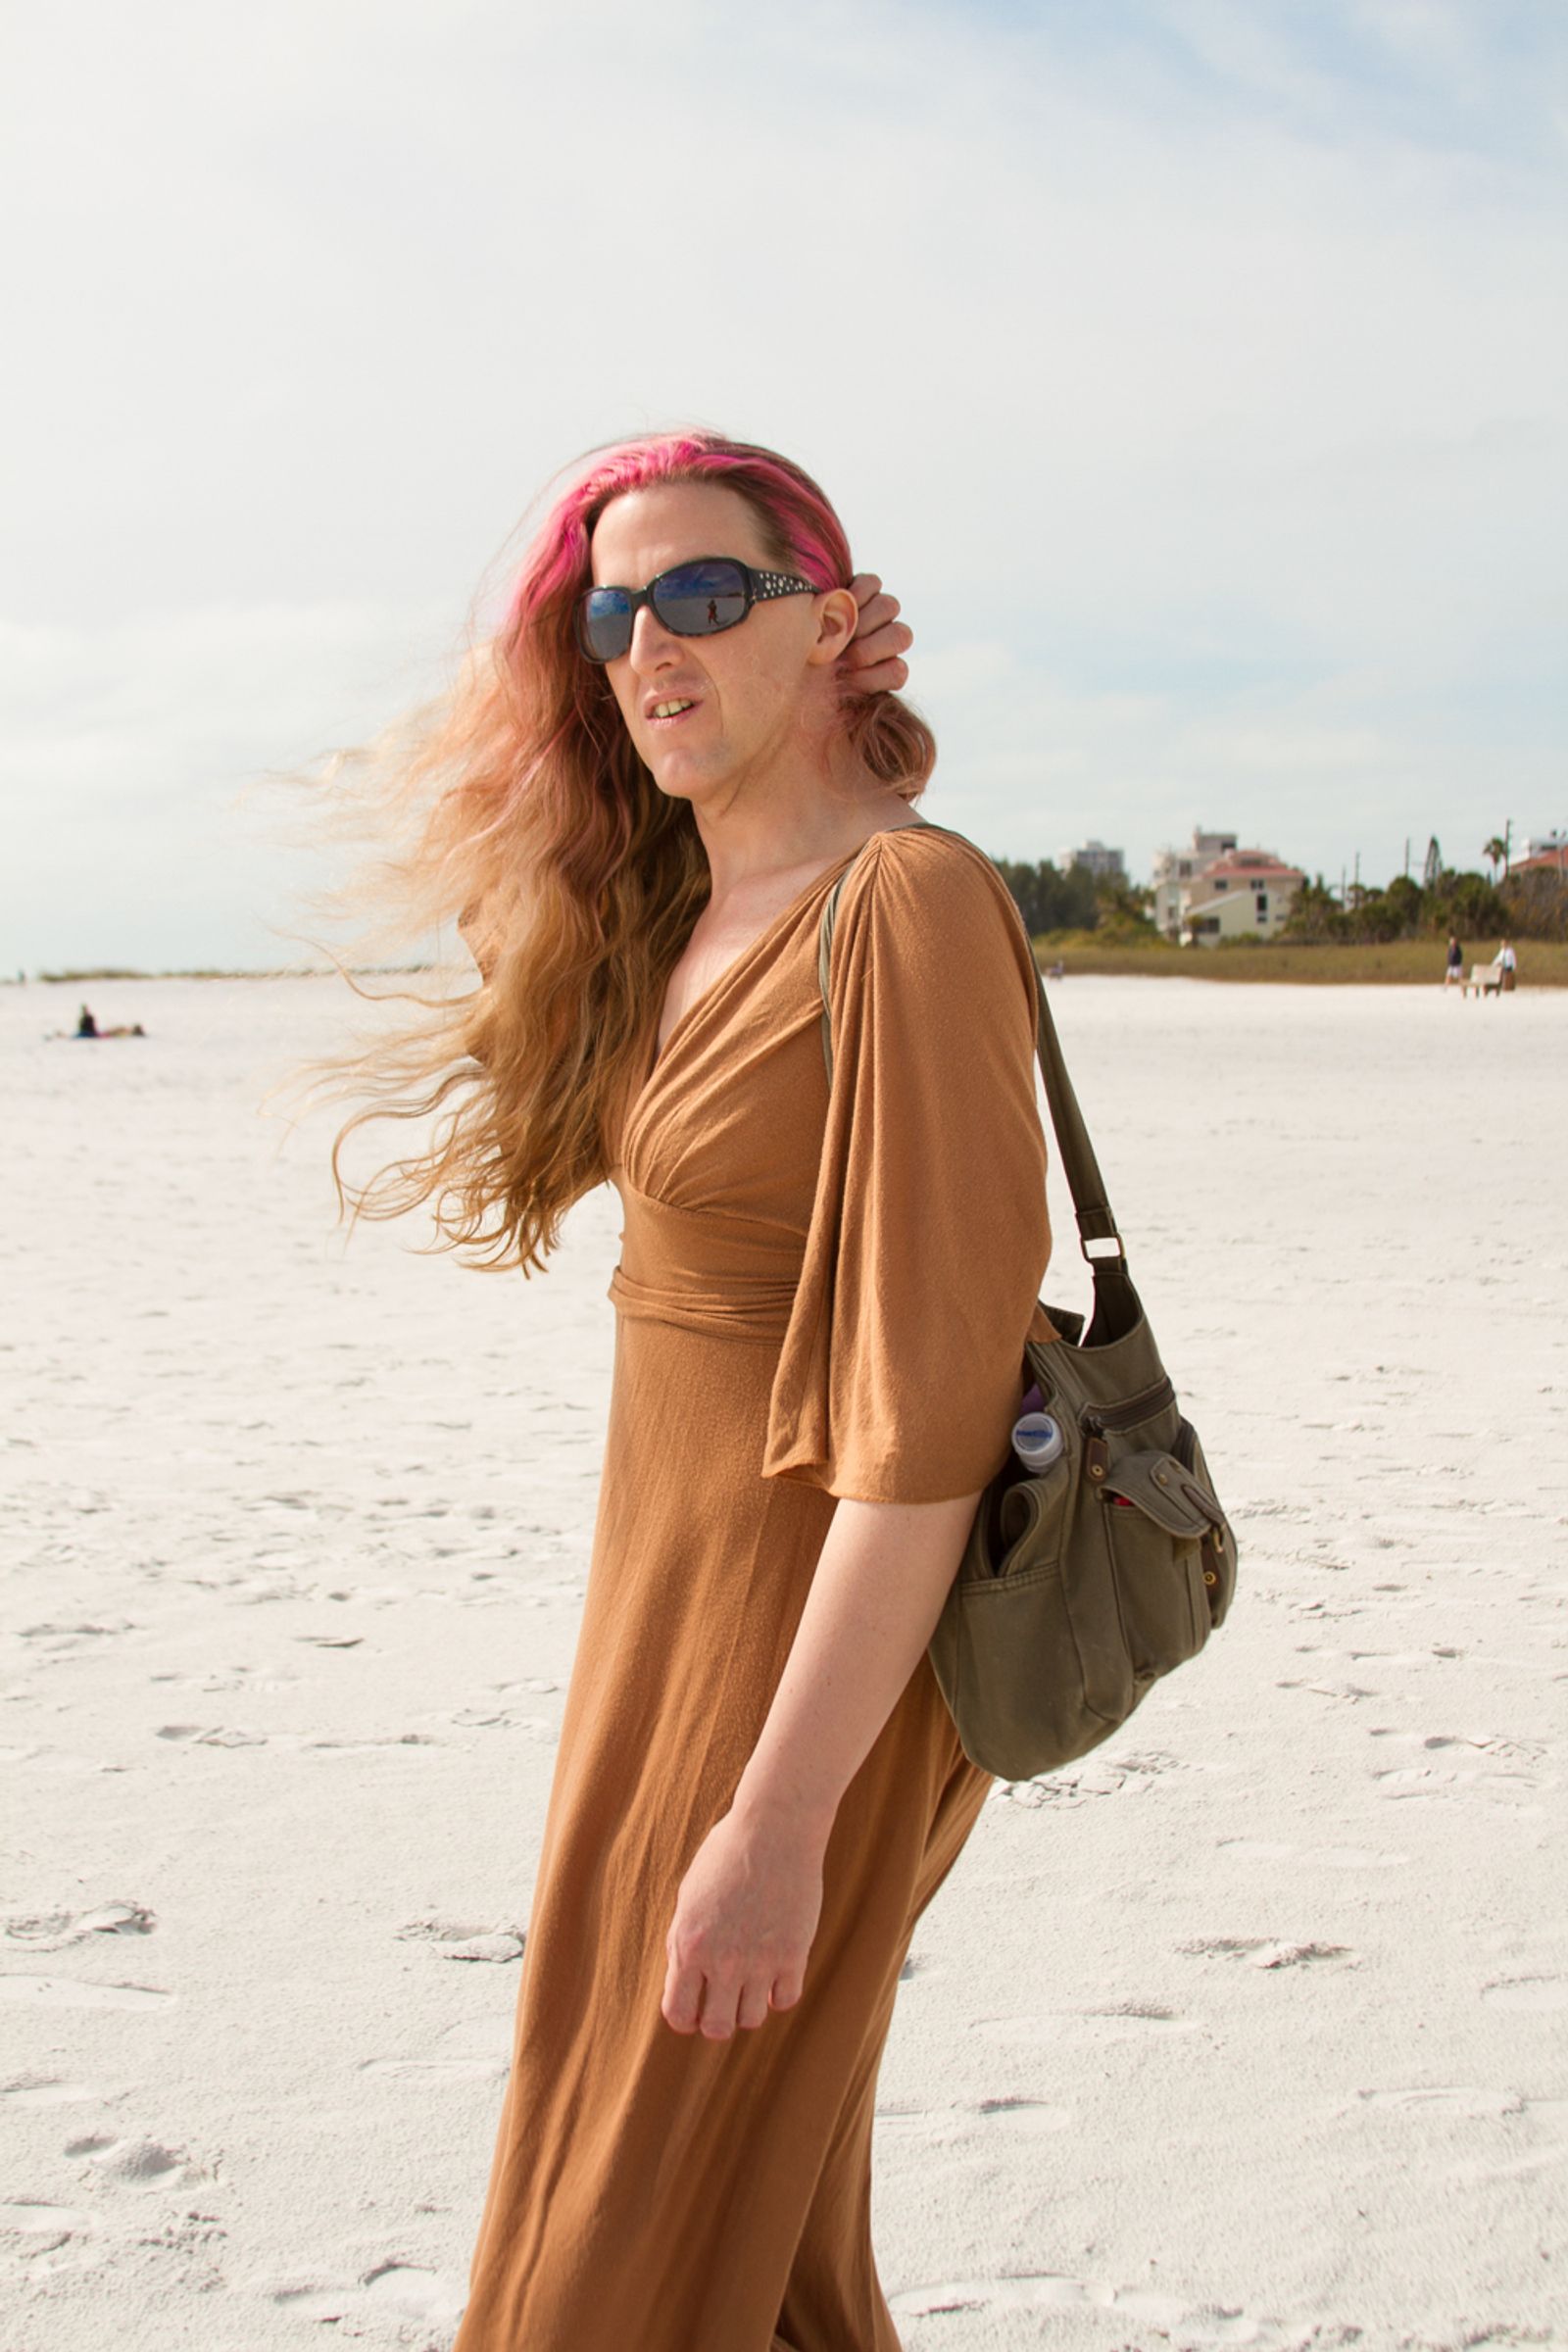 © Jennifer  Loeber - Lorelei, on the beach / 2013